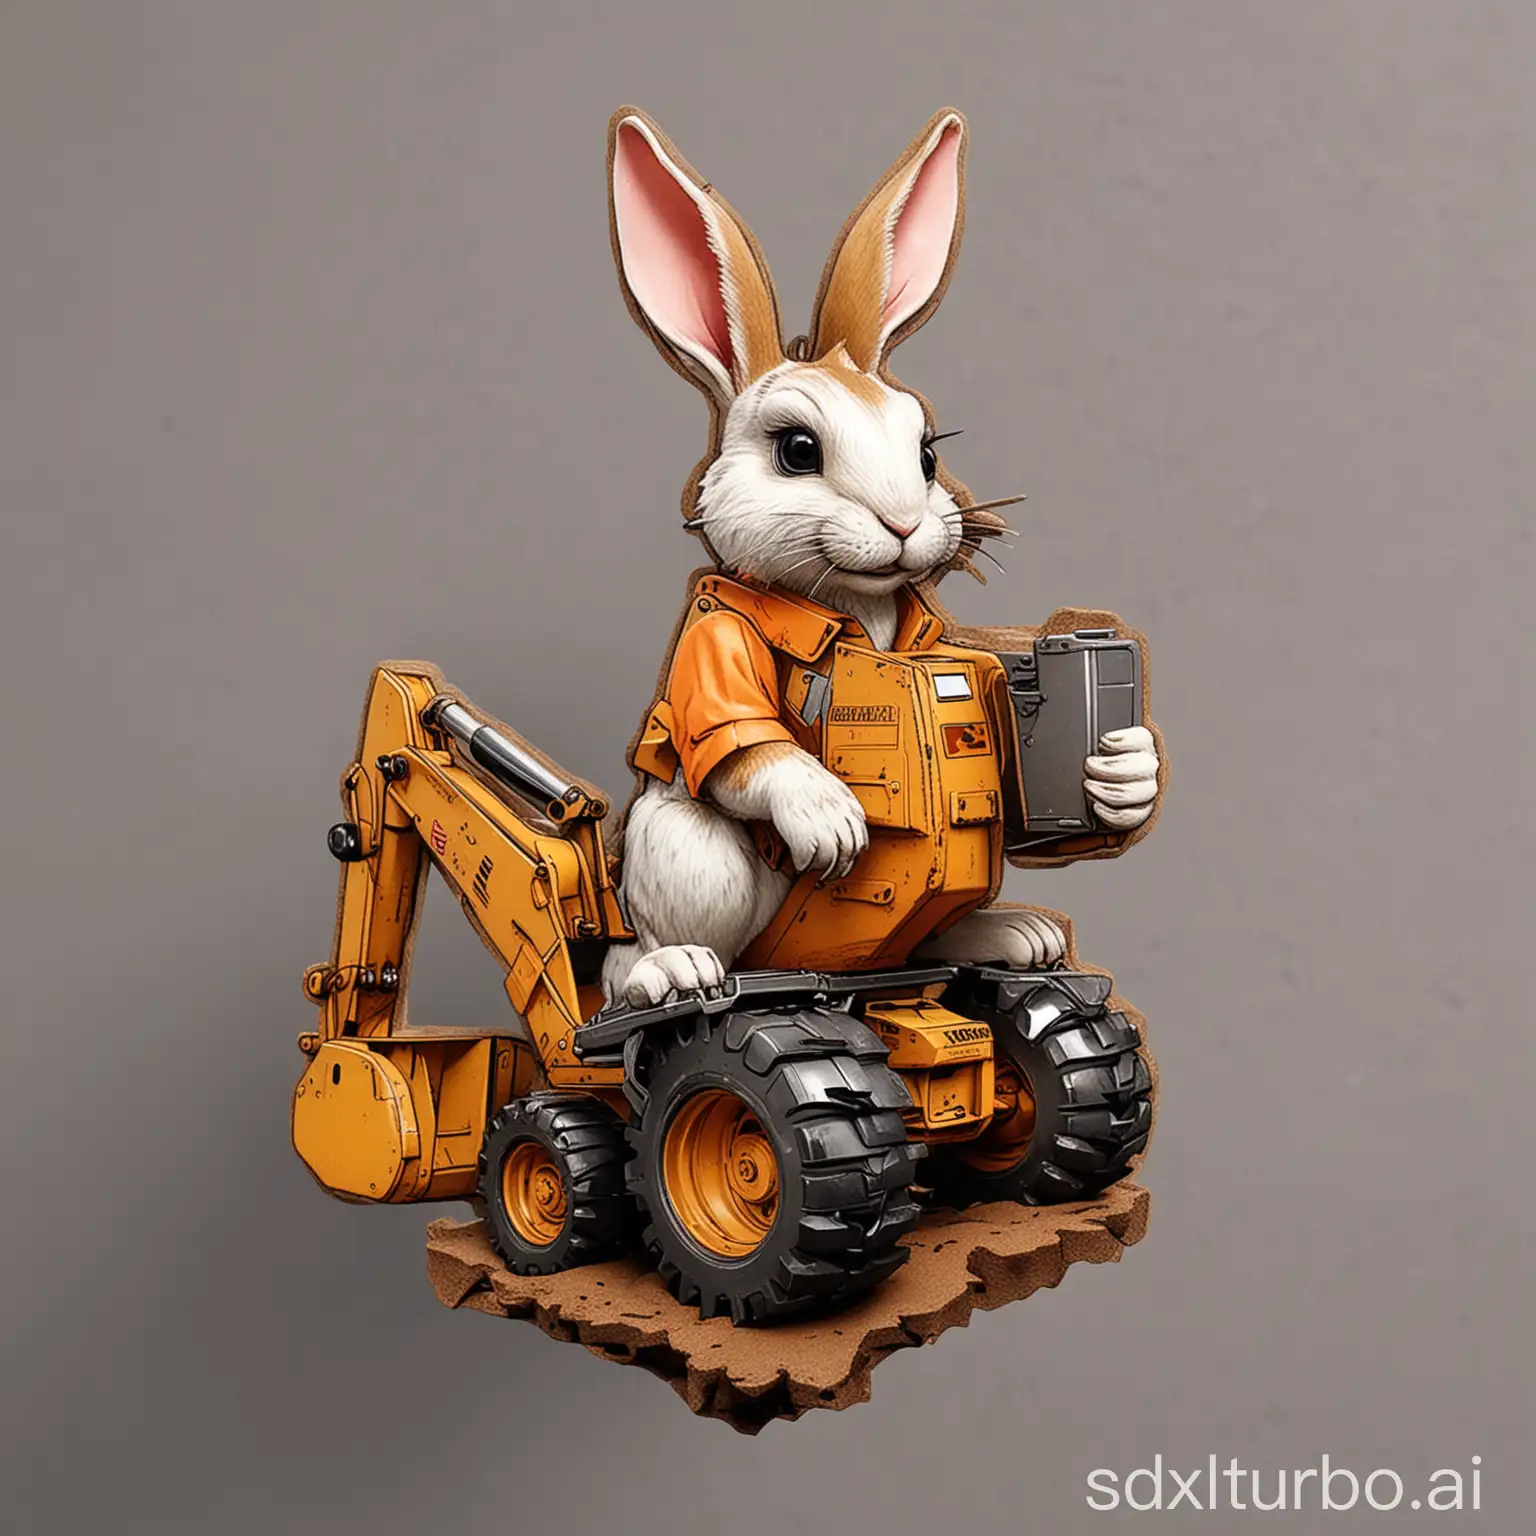 rabbit on excavator, carton style, badge style, high quality